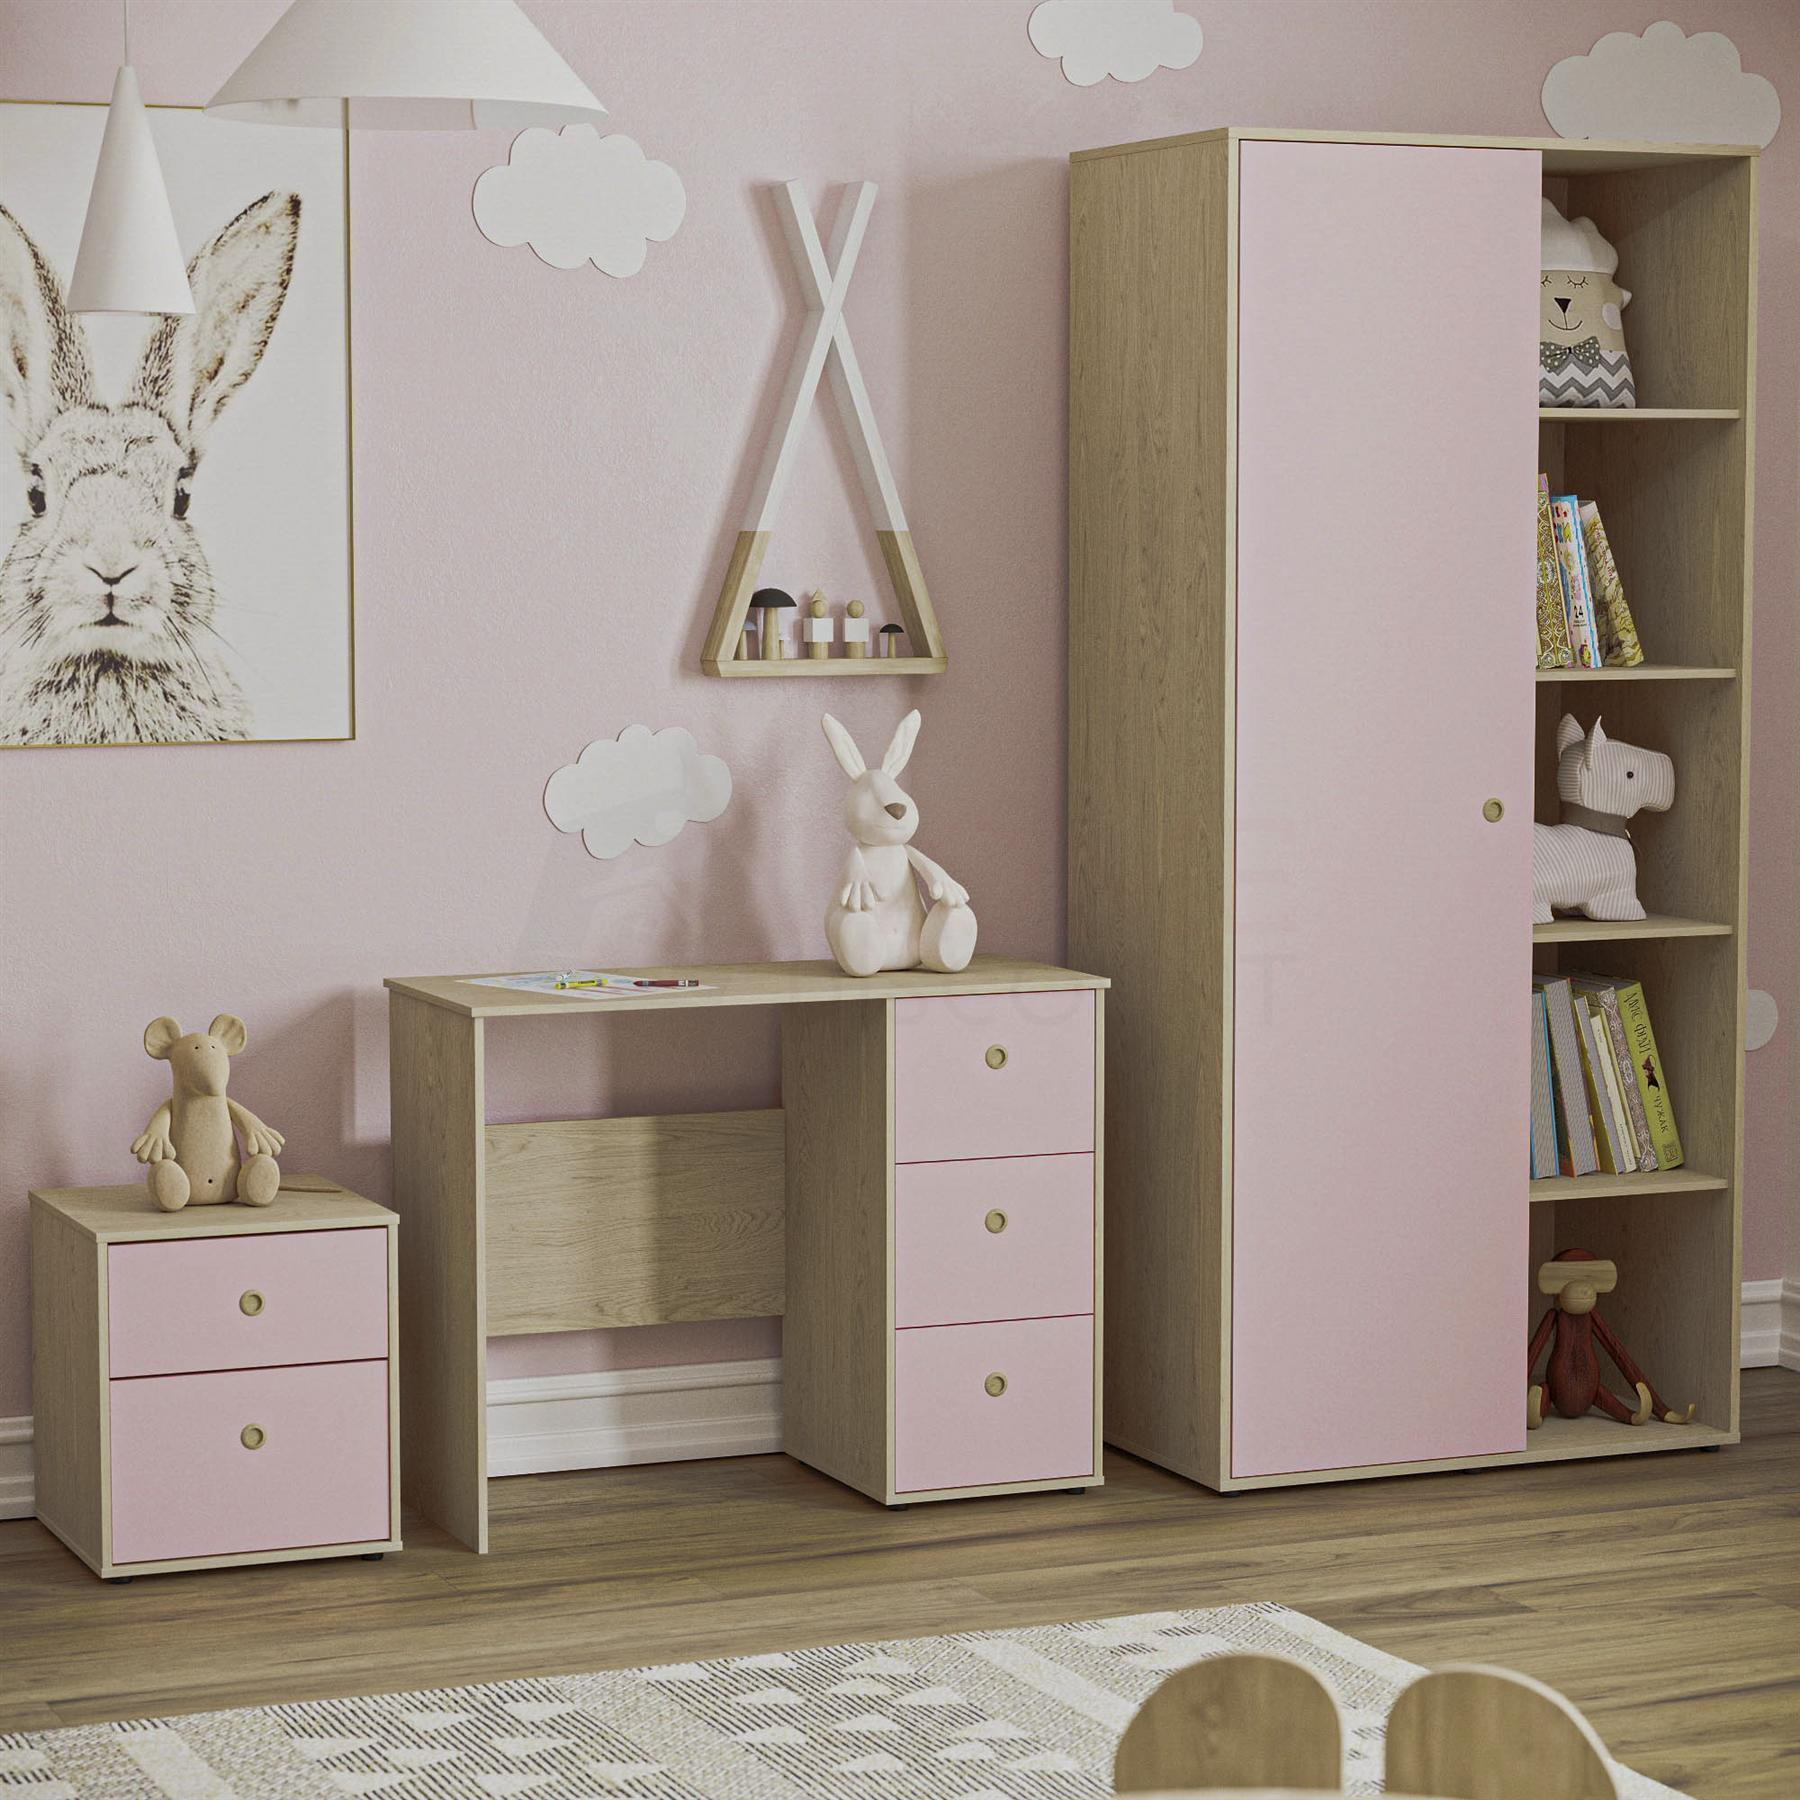 Junior Vida Neptune 3 Piece Bedroom Set Storage Furniture (Desk, Bedside Table, Wardrobe) - image 1